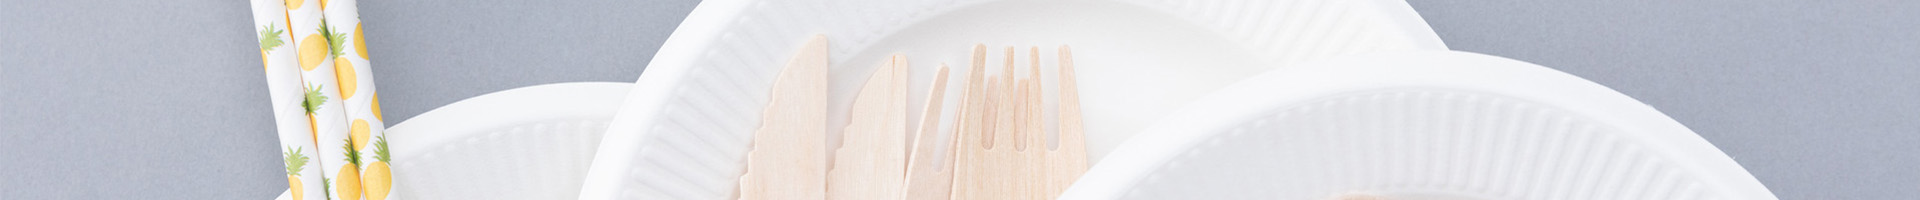 Bamboo Cutlery